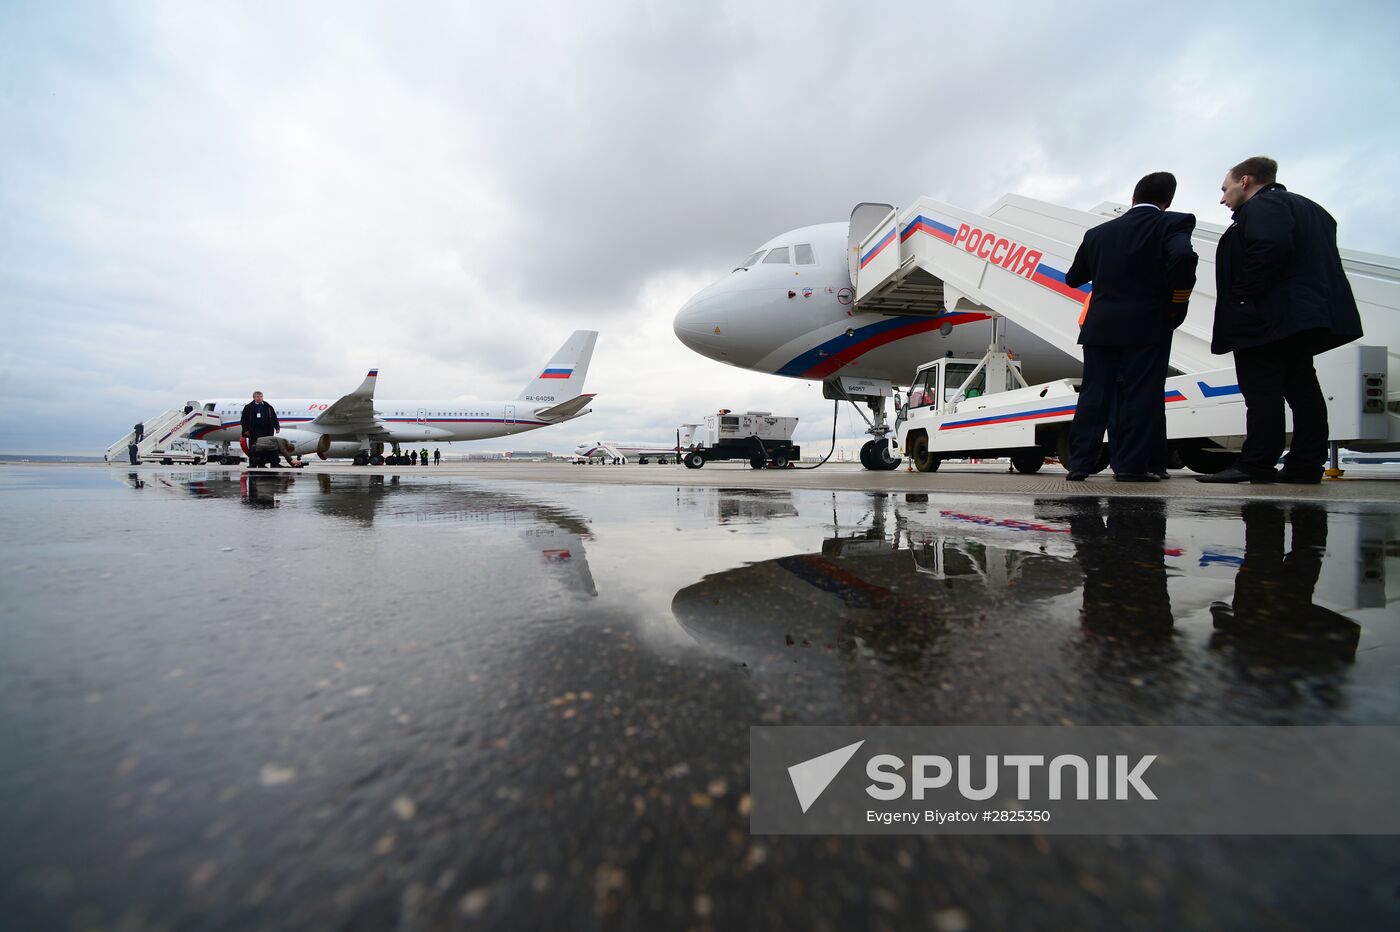 Rossiya special-purpose air unit aircraft are given names